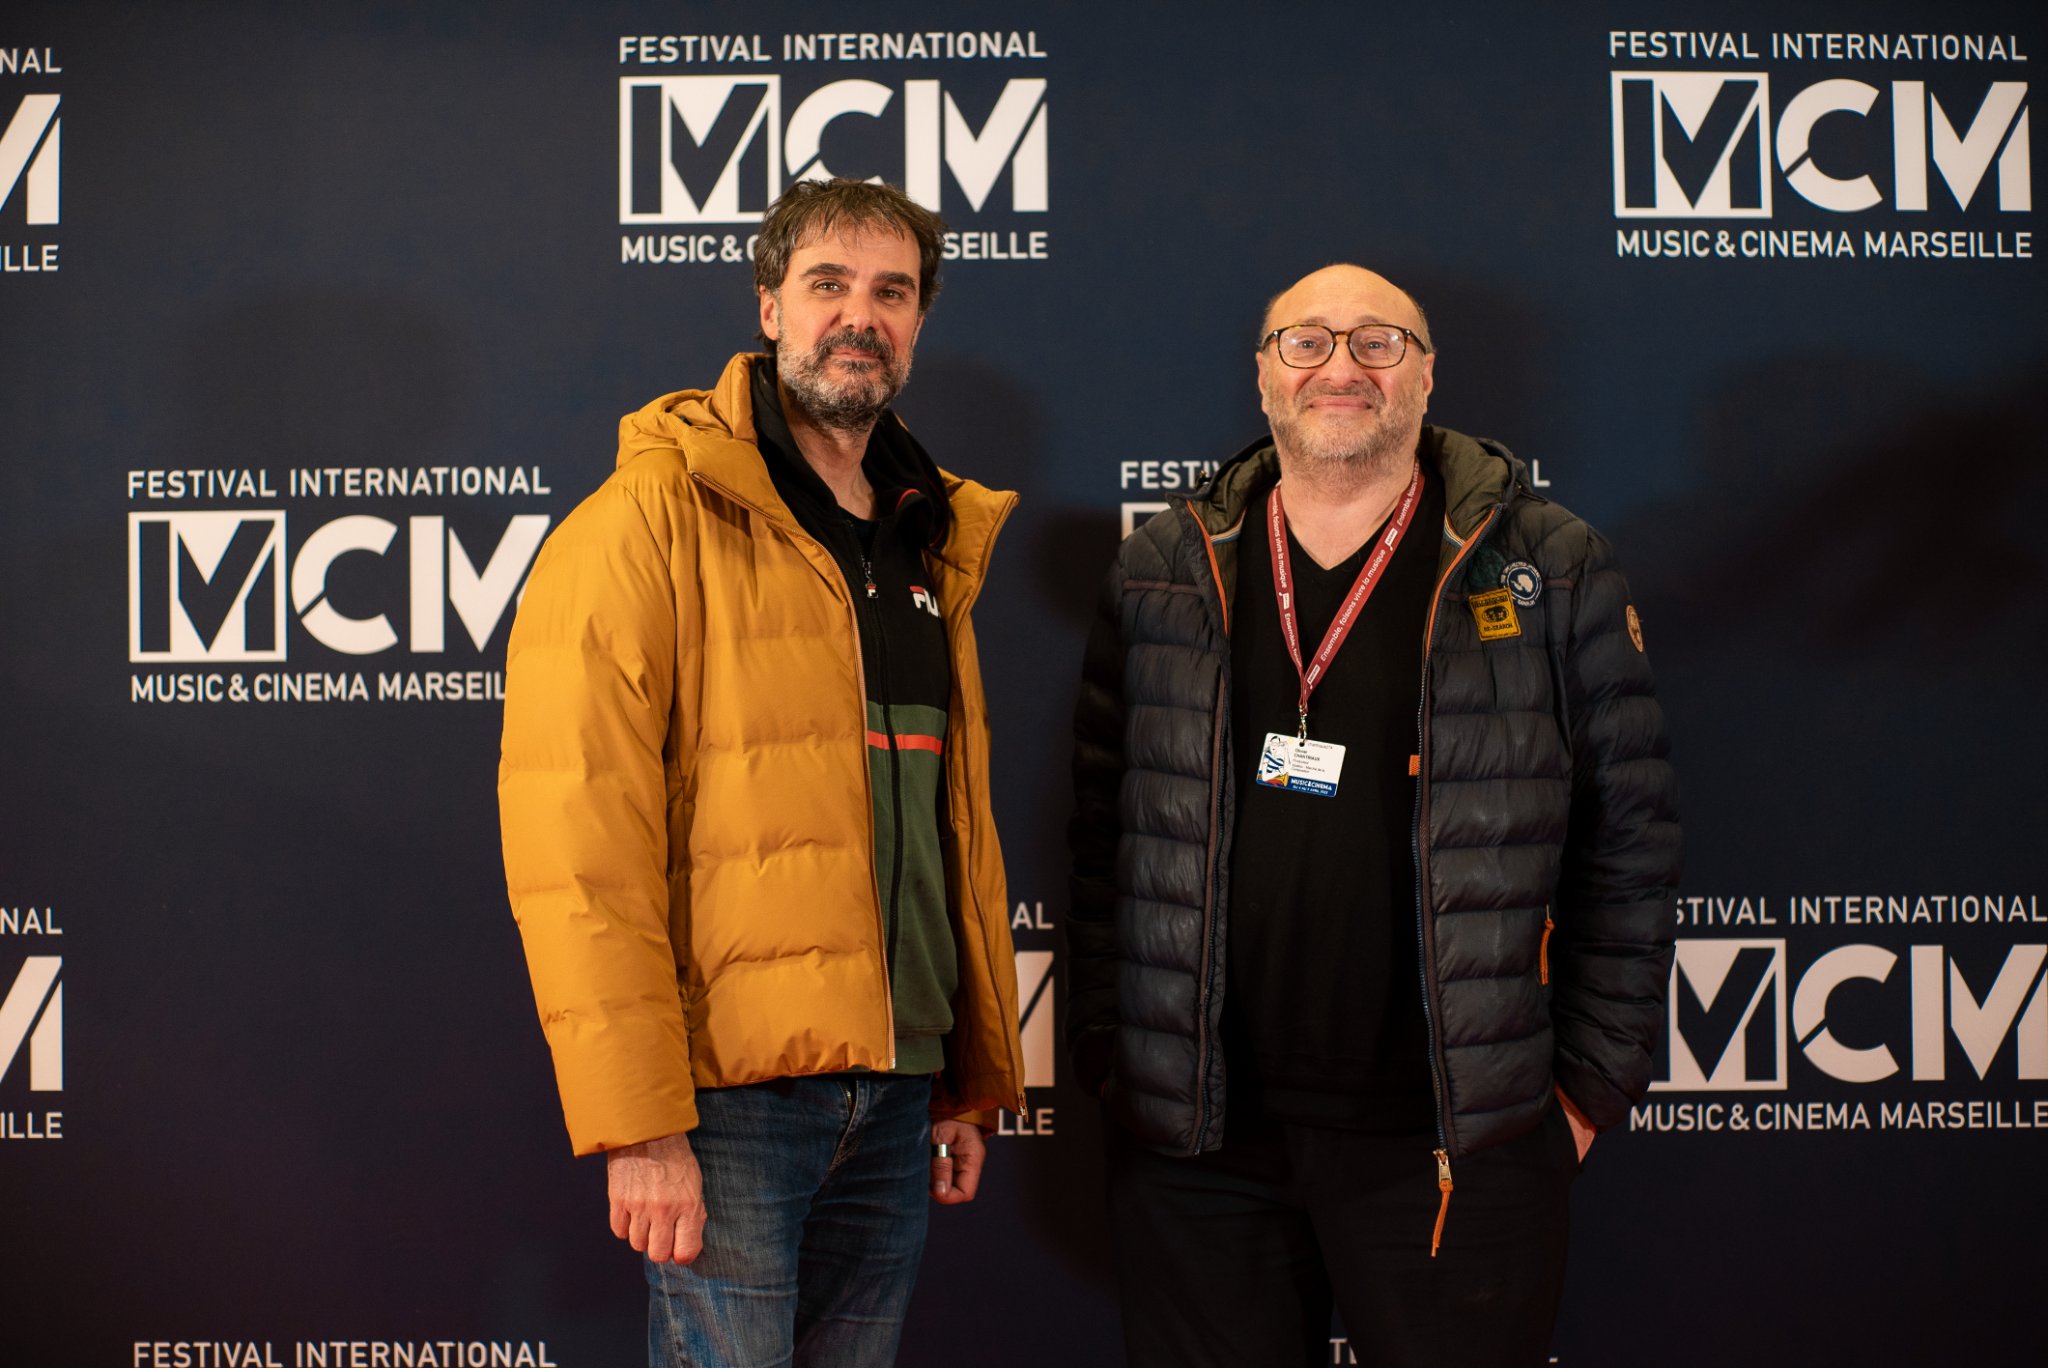 Olivier Chantriaux and Luca Cabriolu represent FILMO2 for 